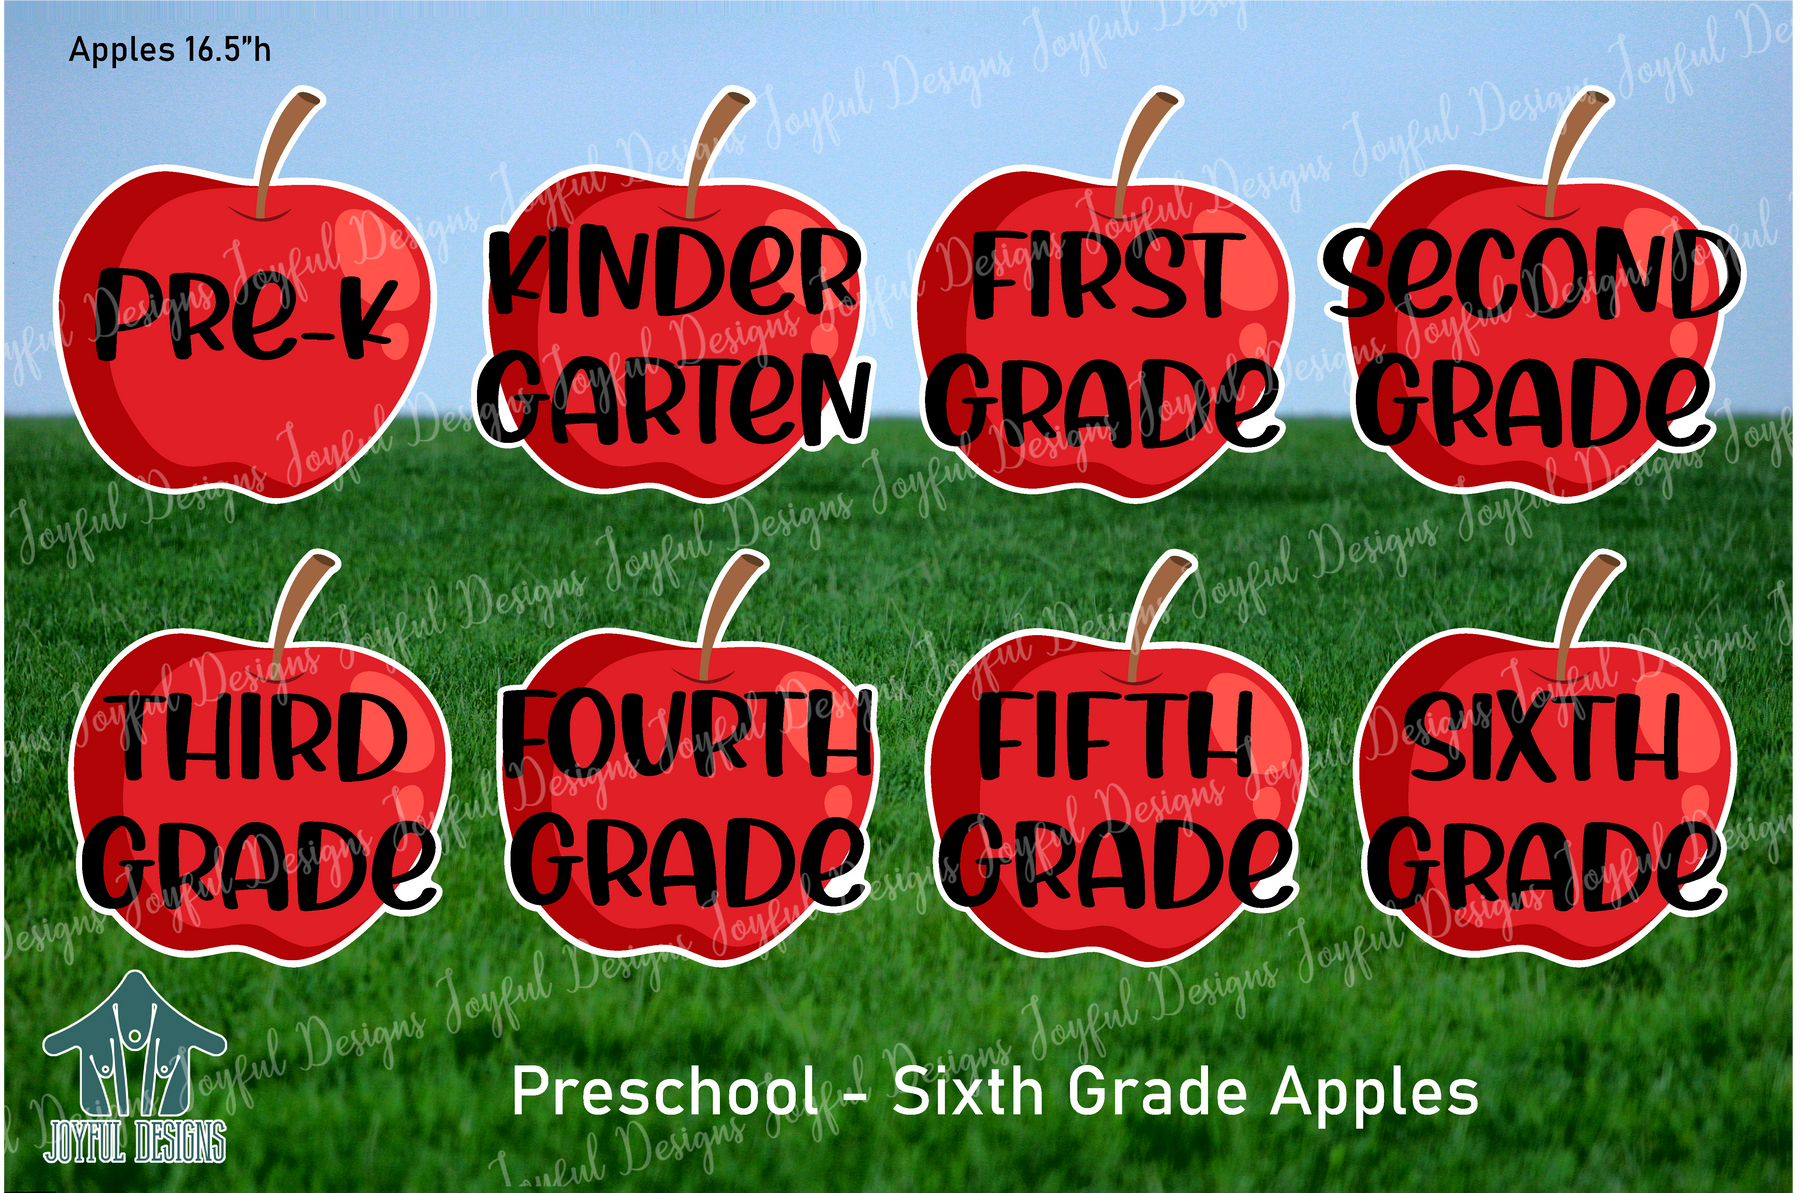 Preschool through Sixth Grade Apples -